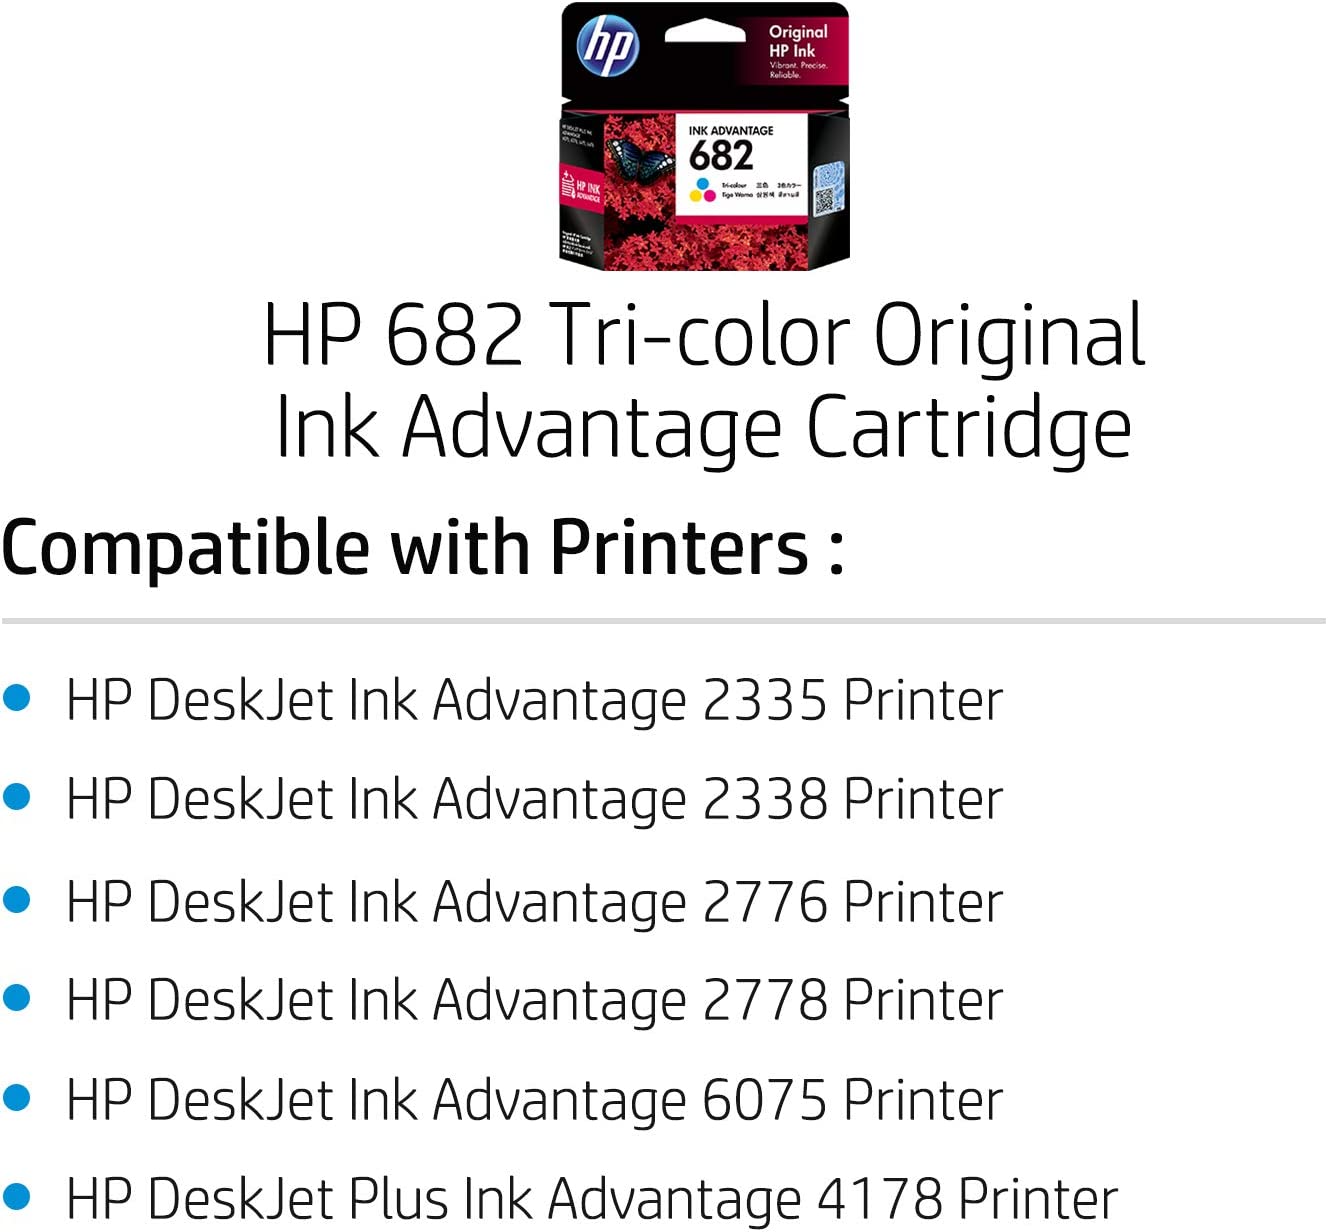 HP 682 Black / Colour Ink Advantage Cartridge